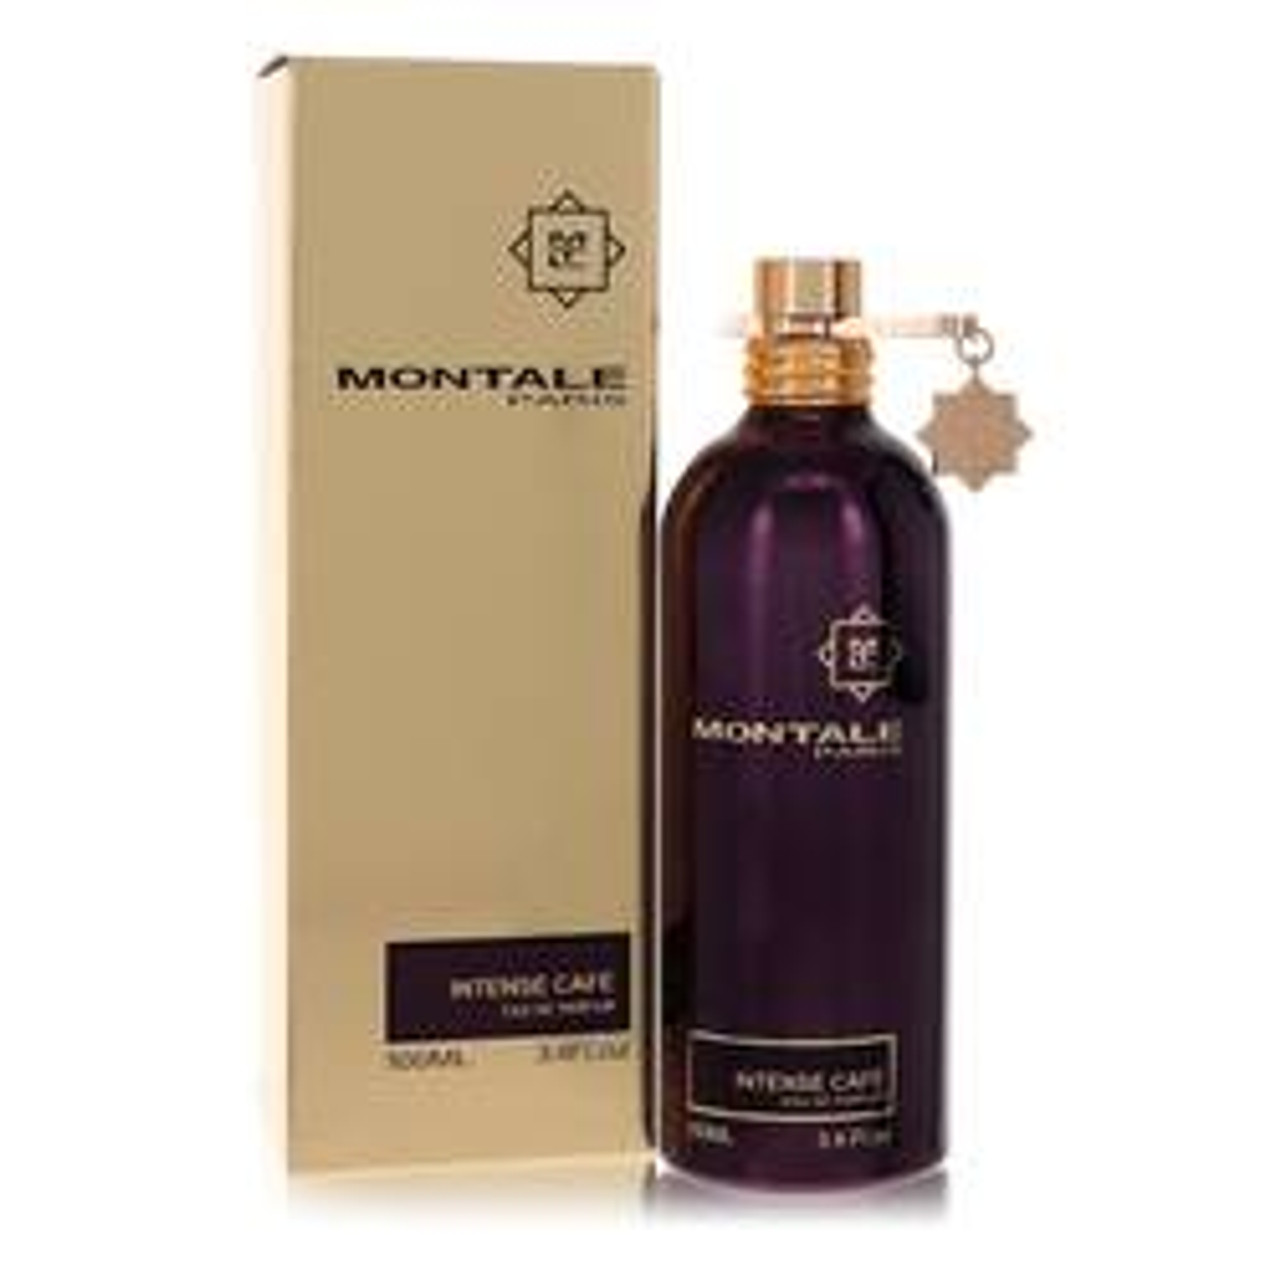 Montale Intense CafAc Perfume By Montale Eau De Parfum Spray 3.4 oz for Women - *Pre-Order